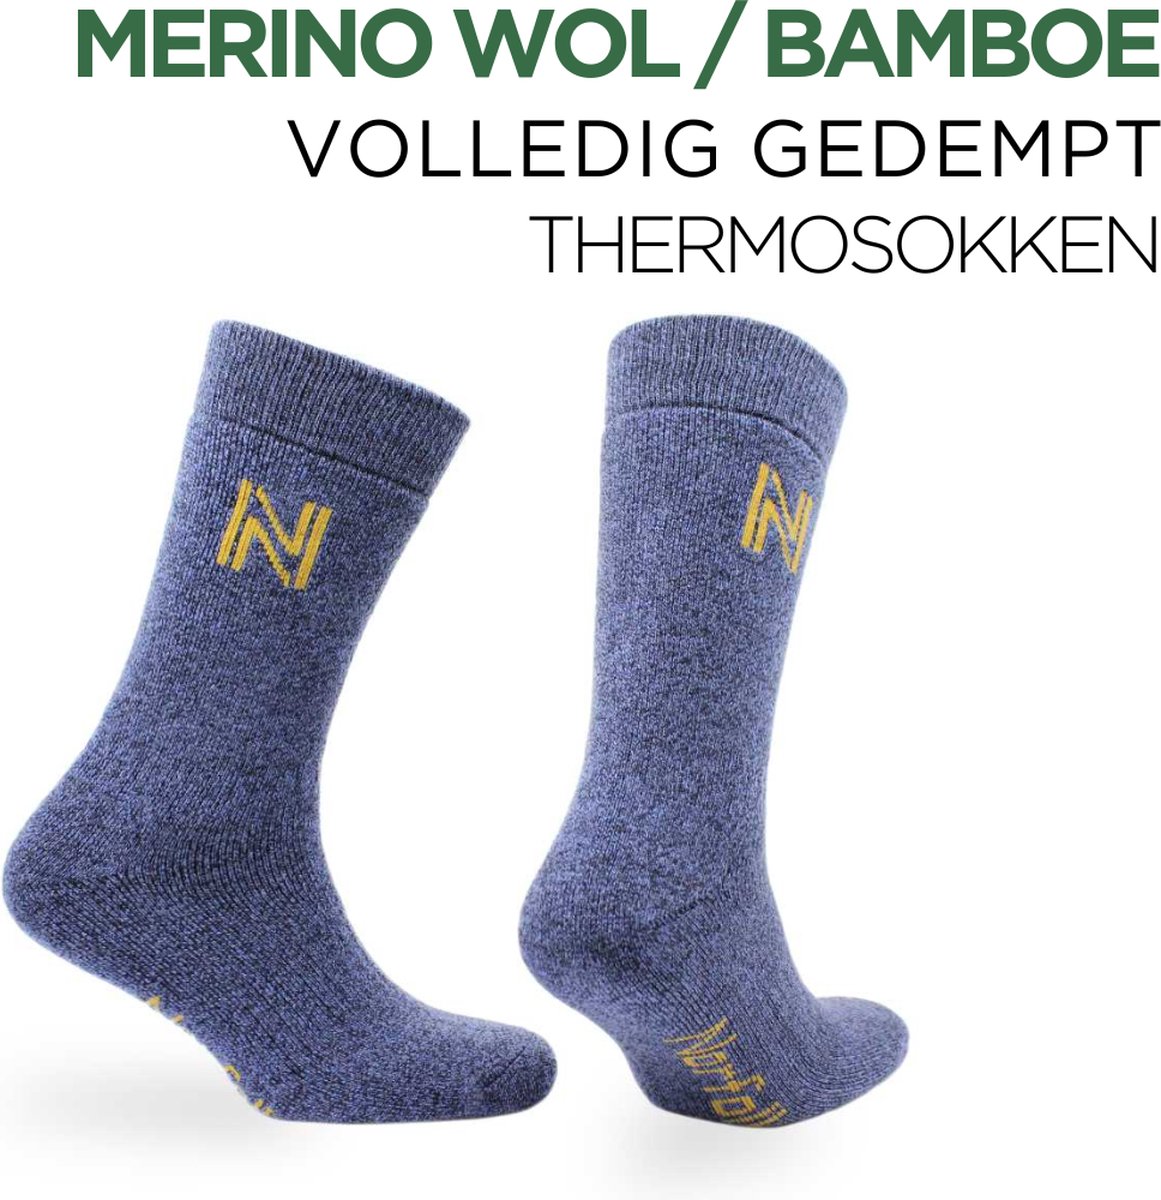 Norfolk - Wandelsokken - Merino wol en Bamboe Mix - Thermische Zacht en Warme Outdoorsokken - Merino wol sokken - Sokken Heren - Wollen Sokken - Blauw - Maat 43-46 - Gabby